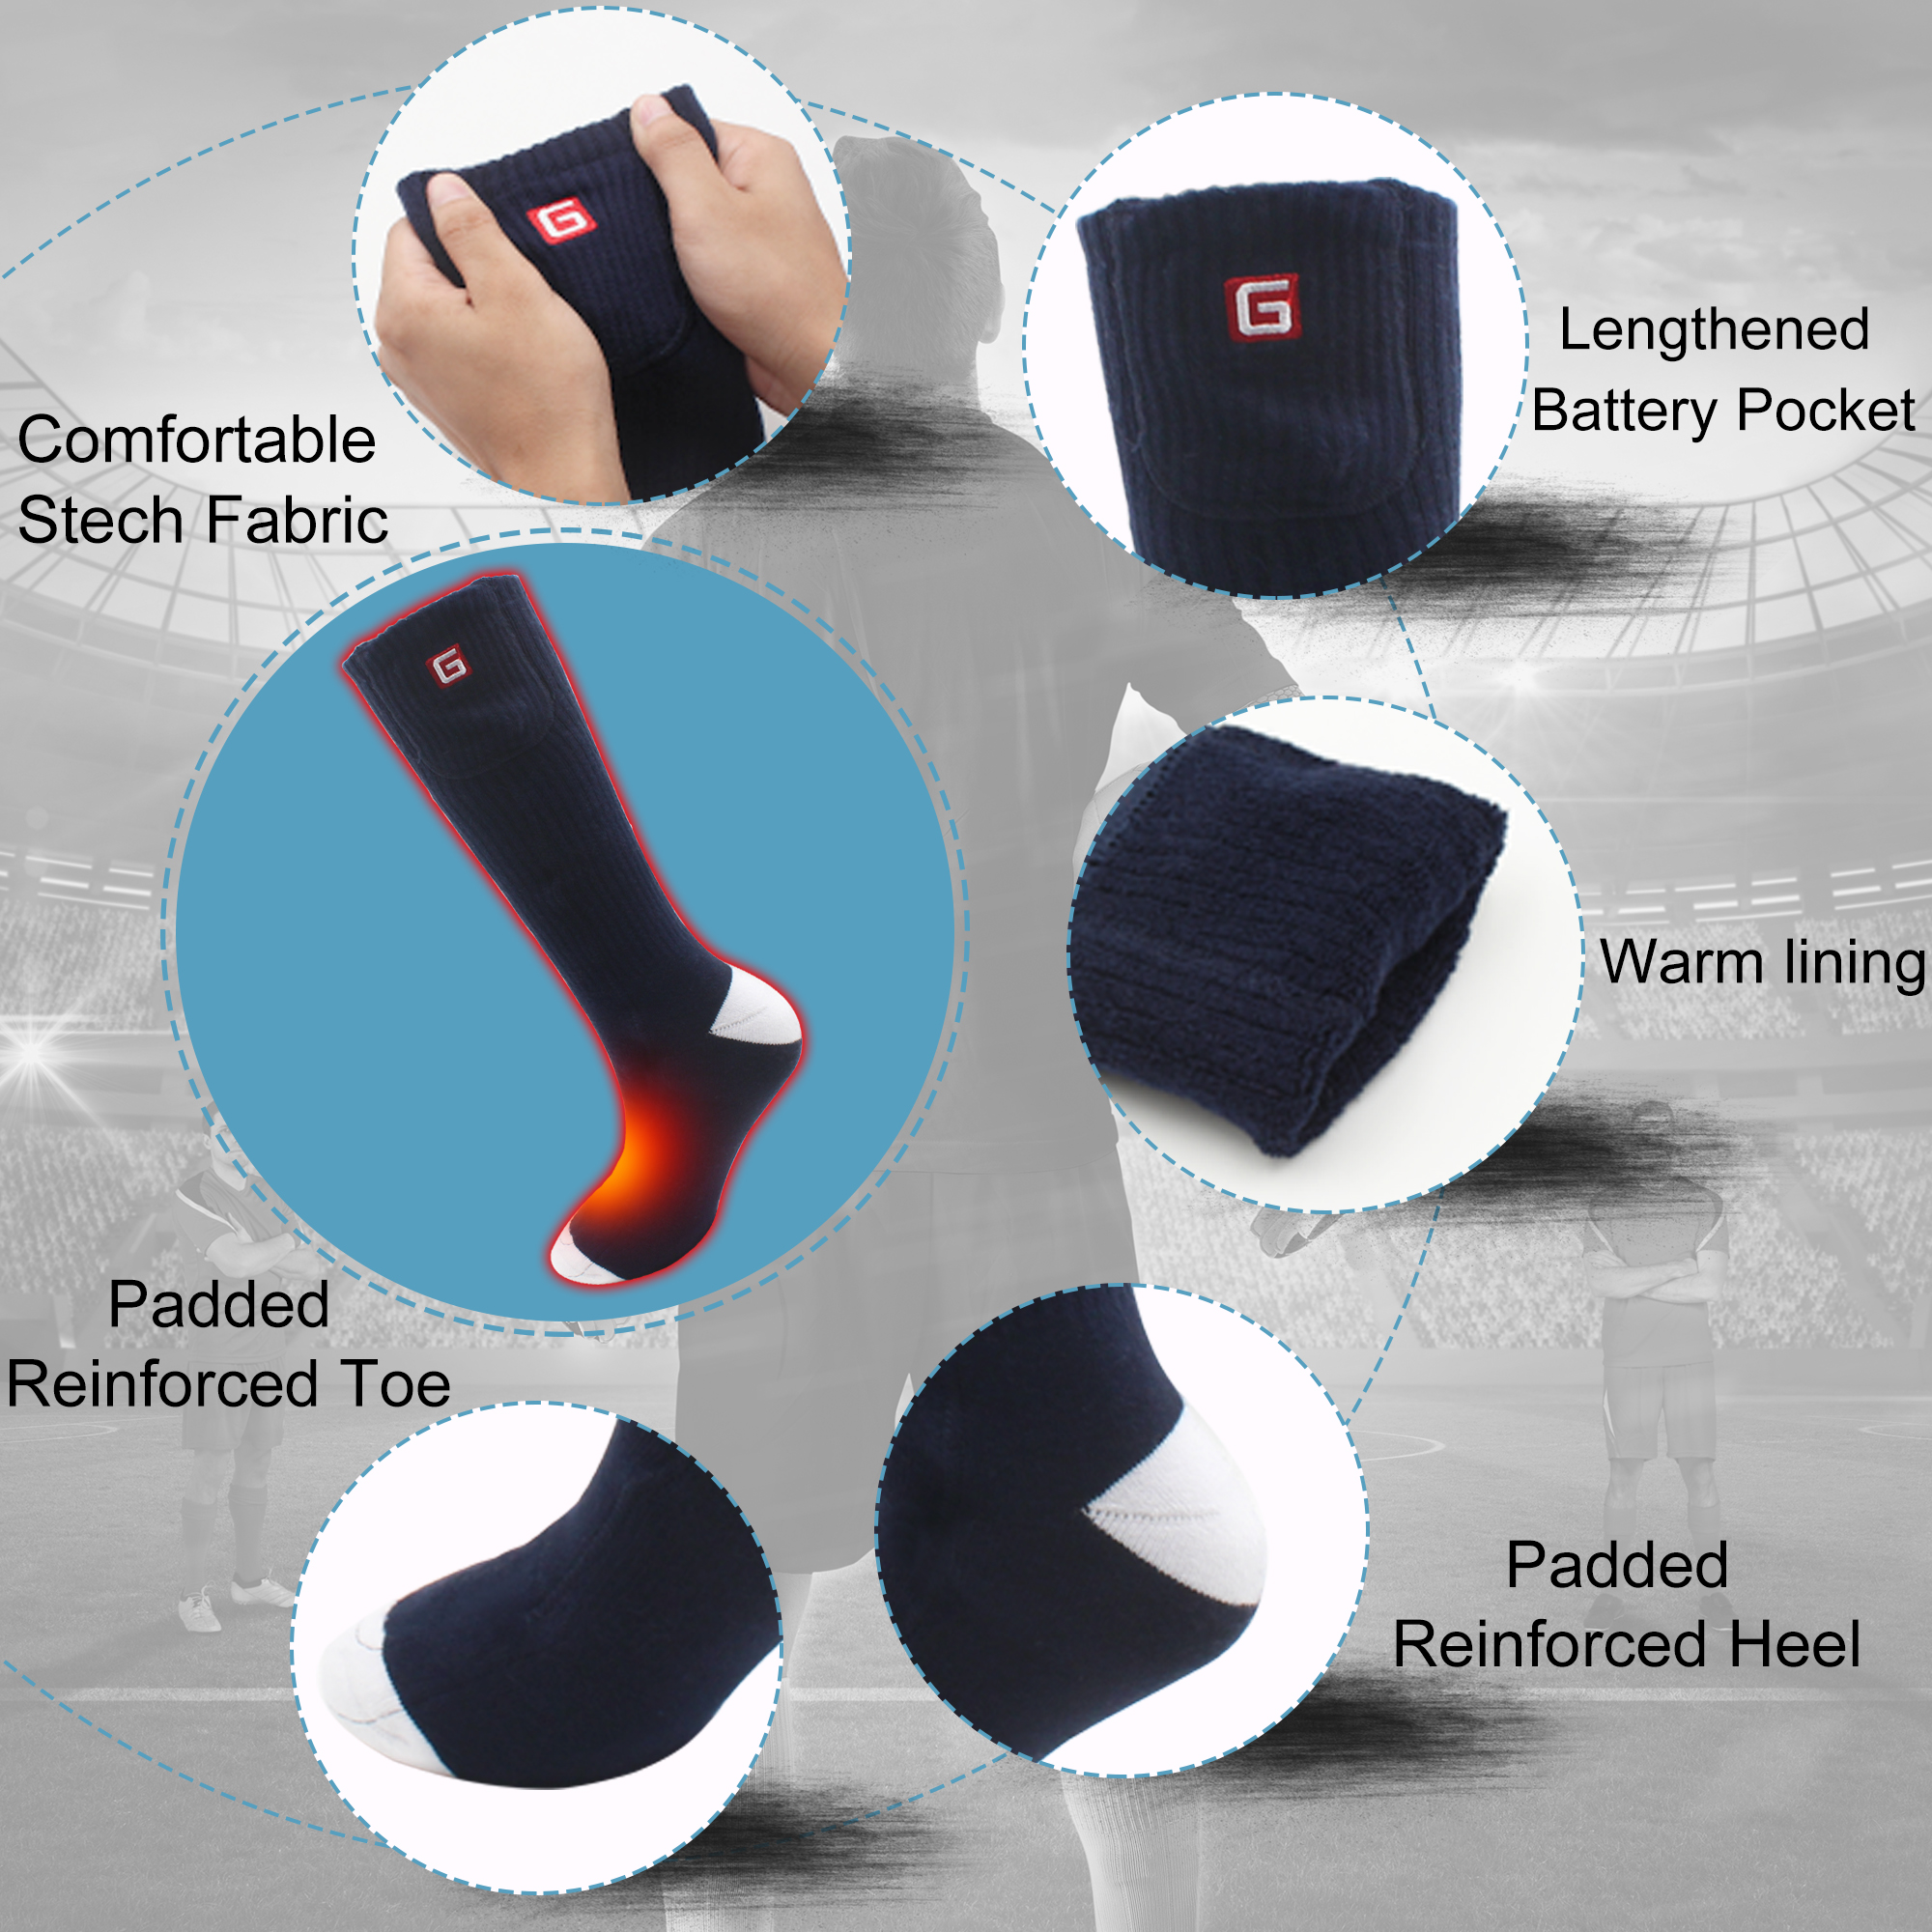 Electric Heated Socks Men, 3.7V Cold Winter Warm Skiing Socks,Rechargeable Battery Heating Socks Women